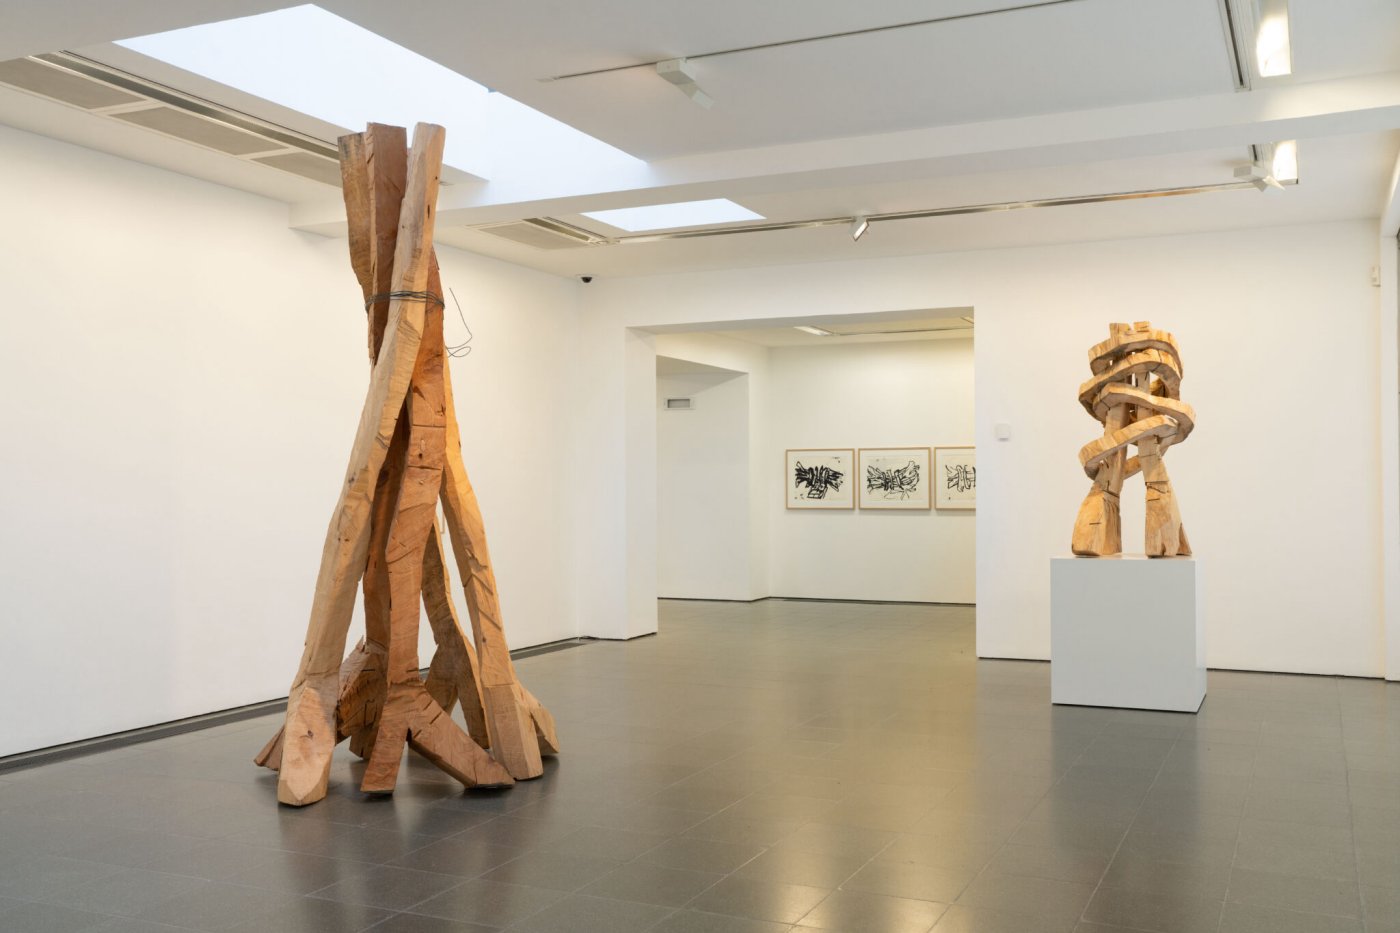 Installation image for Georg Baselitz: Sculptures 2011-2015, at Serpentine Galleries